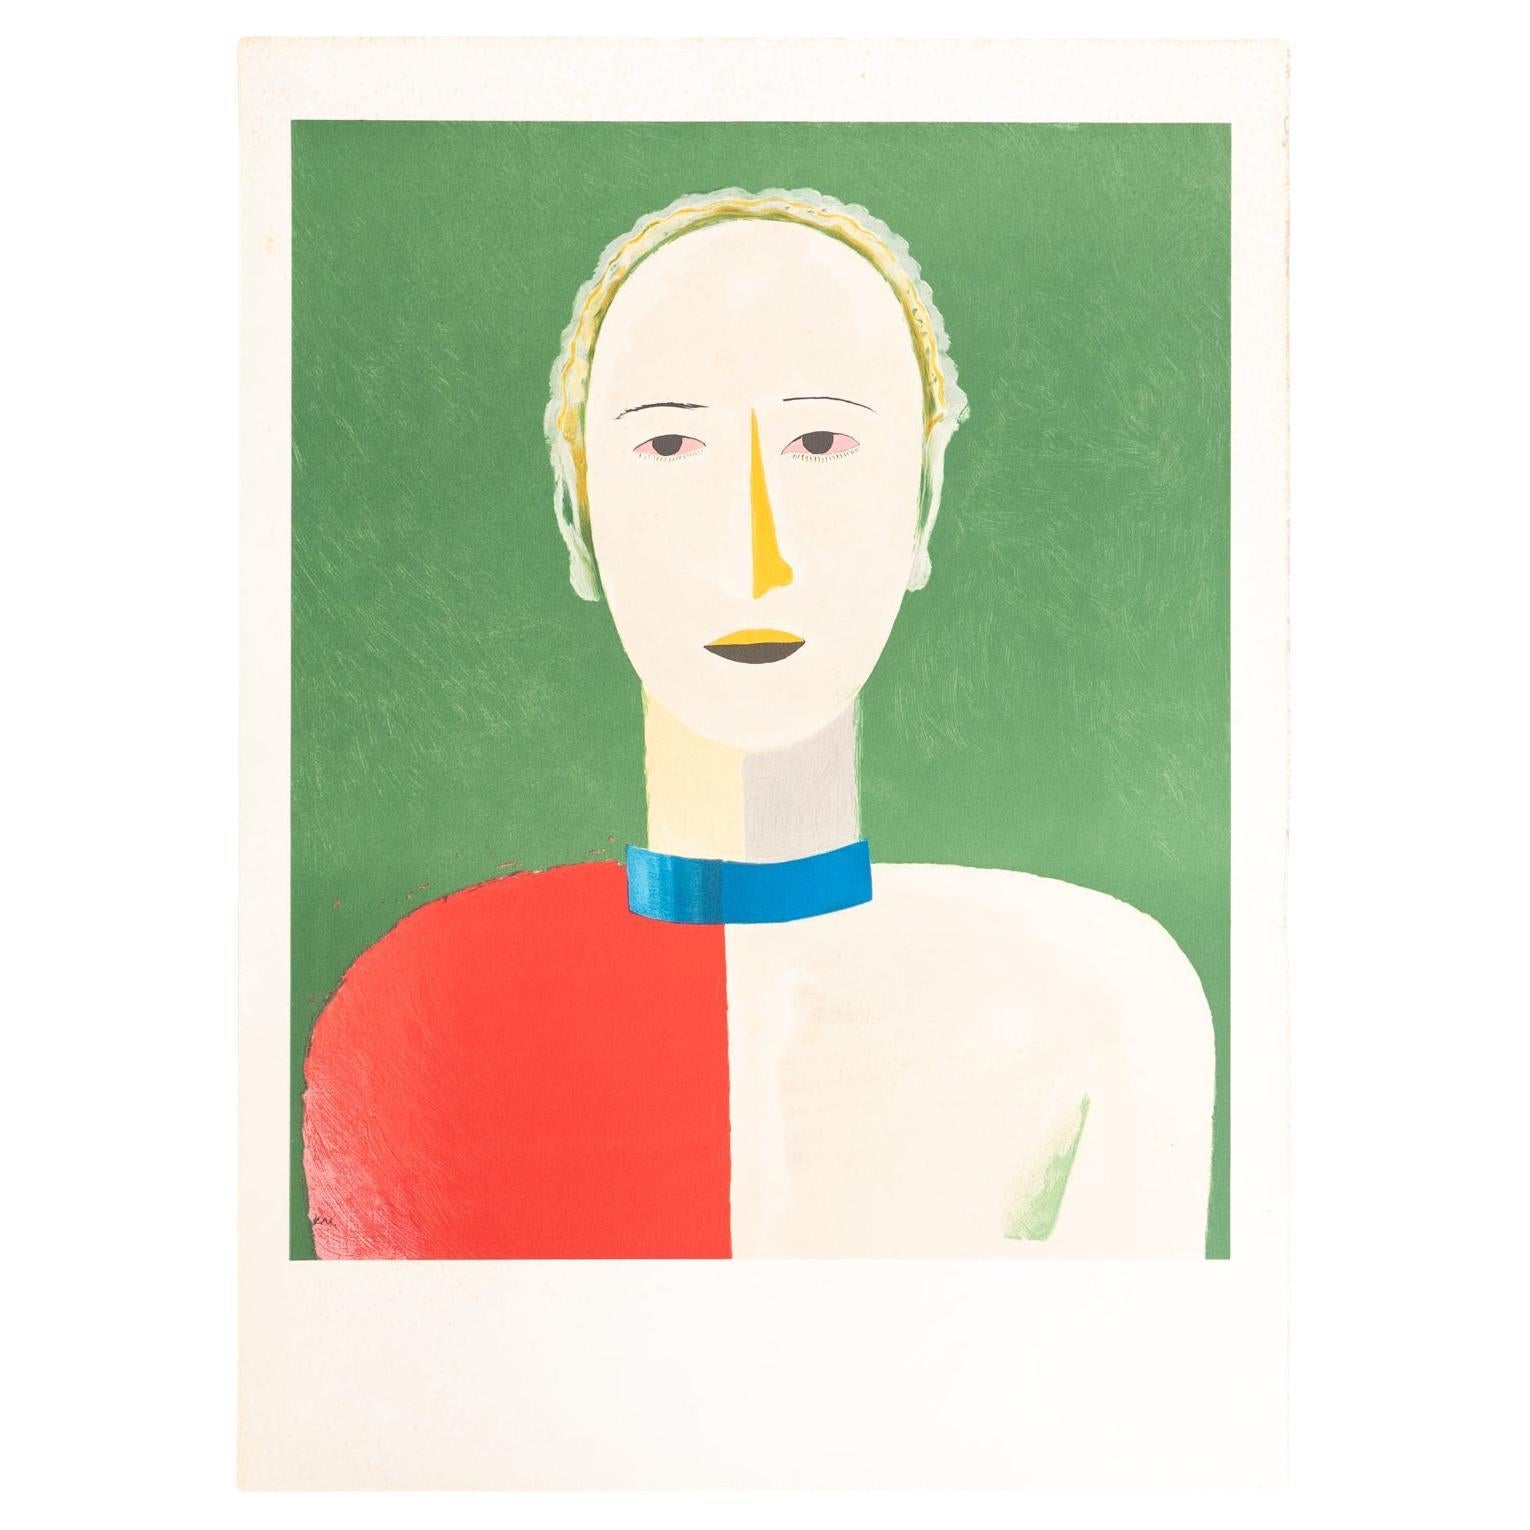 Kazimir Malevich "Portrait of a Female" Lithography